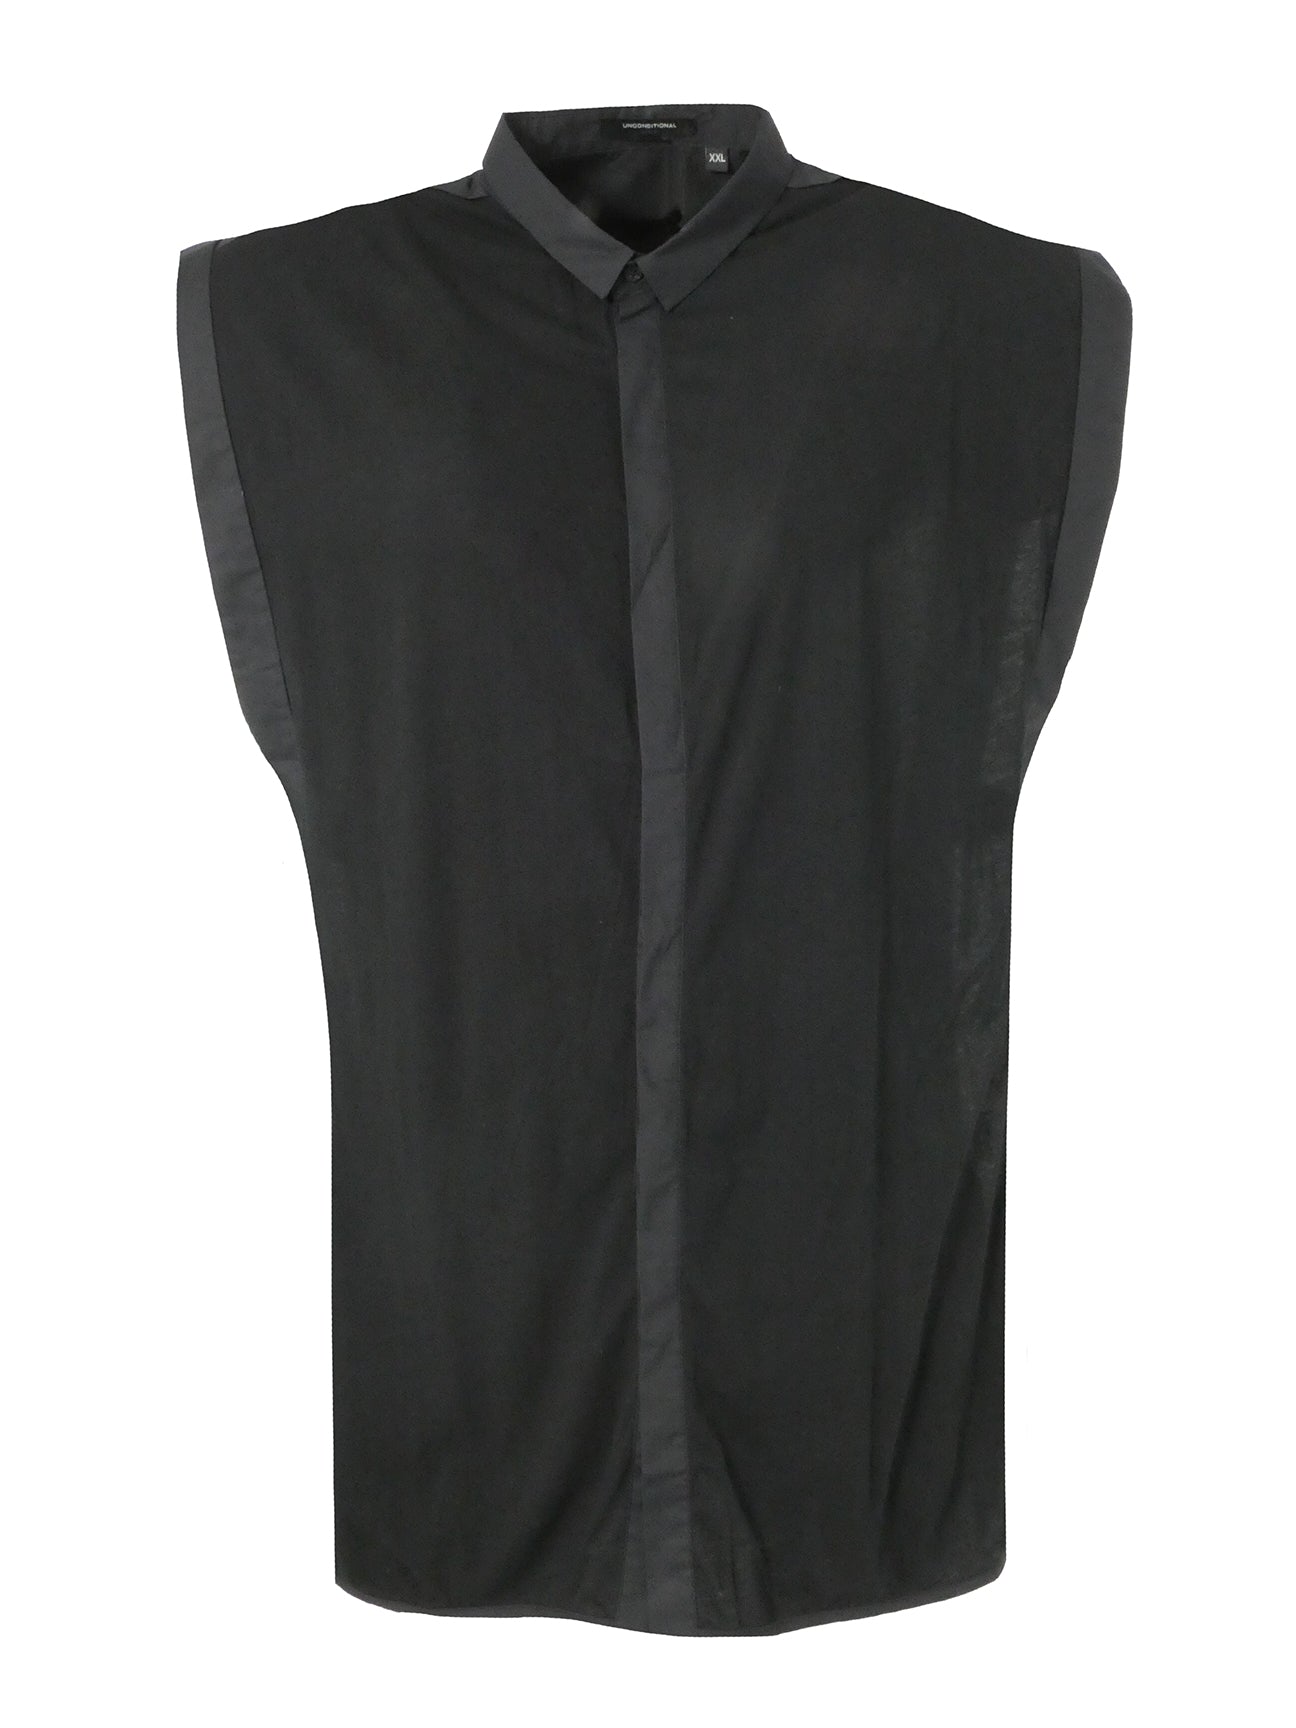 Black Sleeveless Shirt